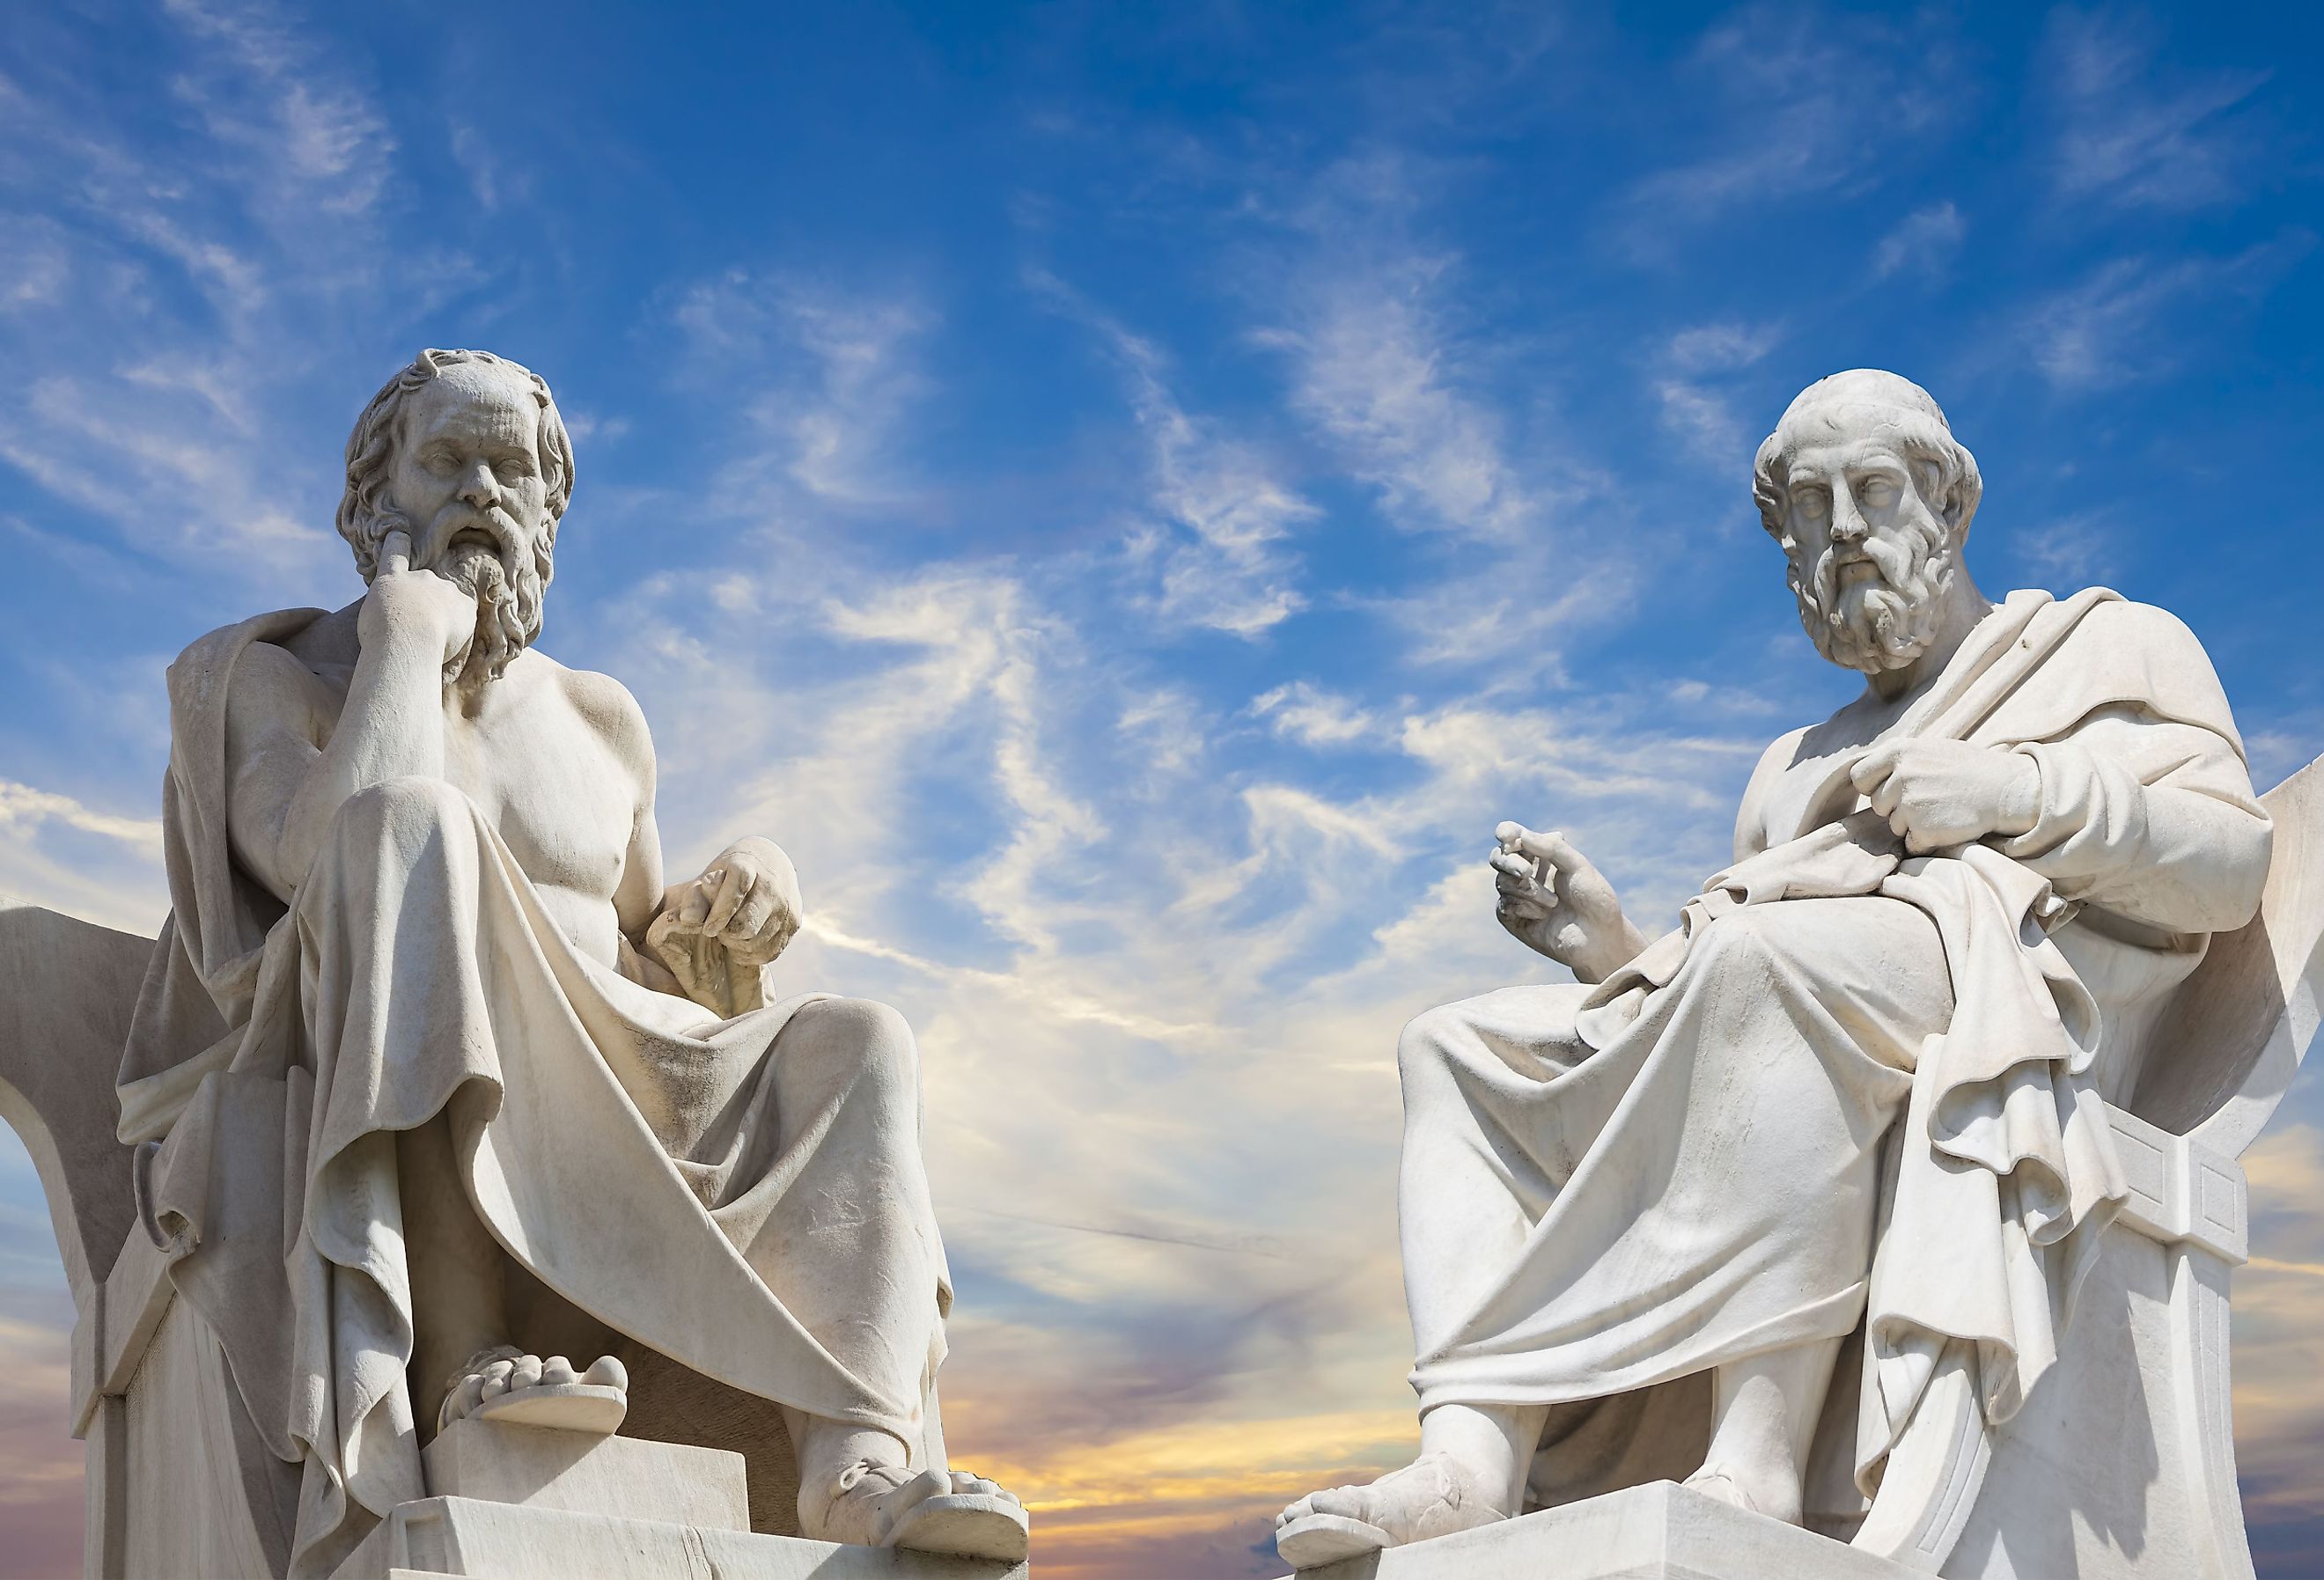 Statues of Plato and Socrates, ancient Greek philosophers. Image credit Anastasios71 via Shutterstock